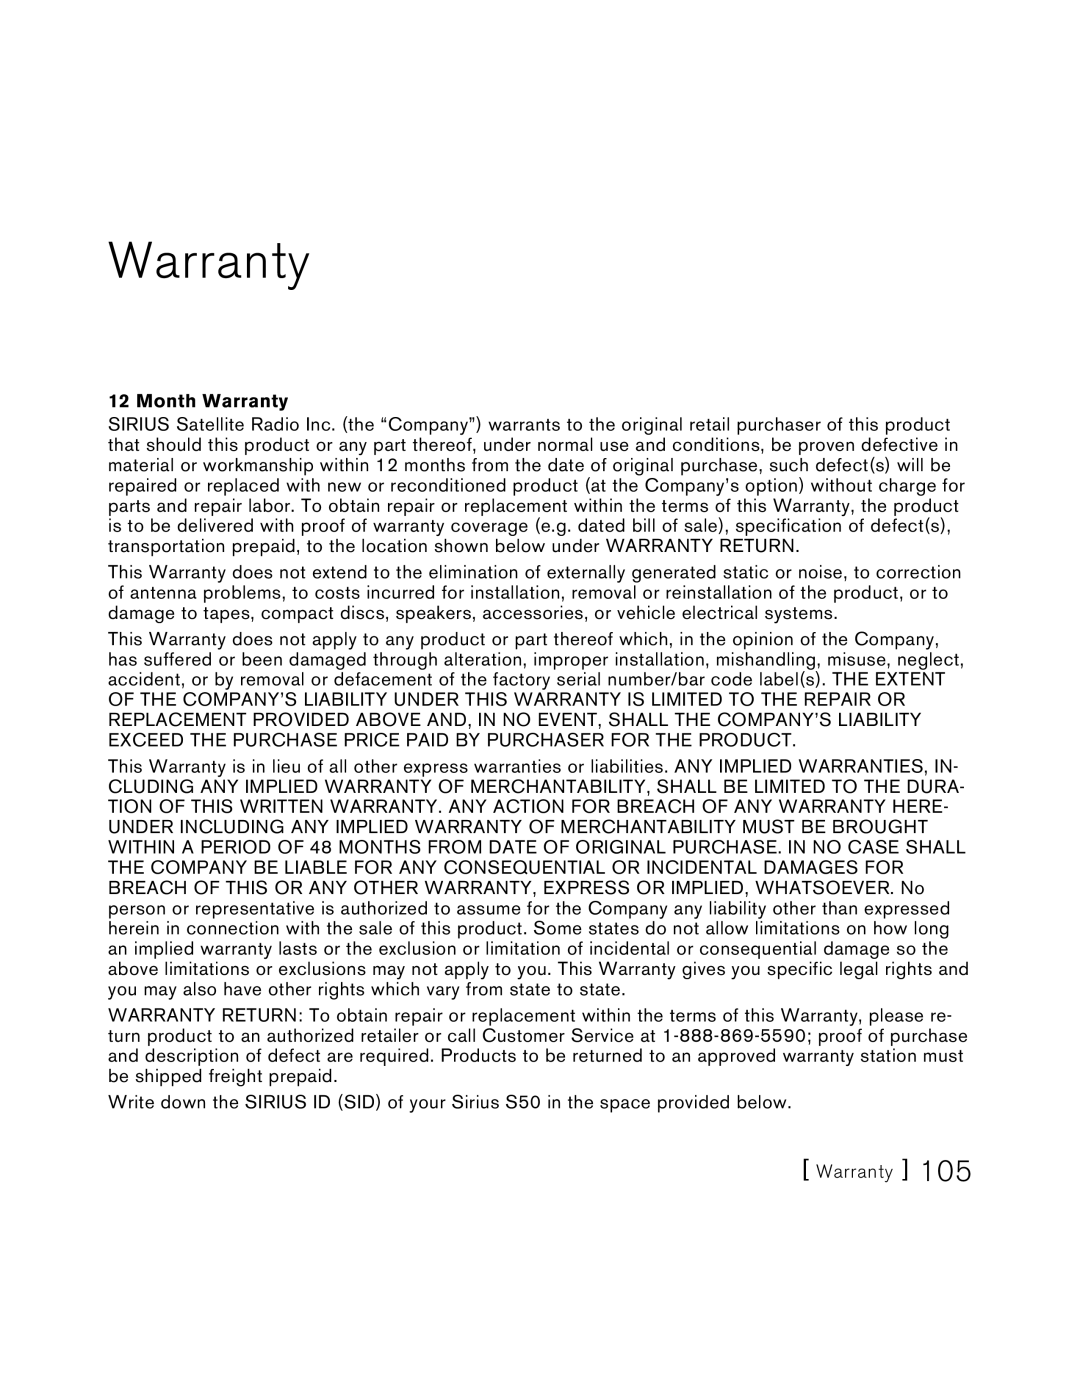 Sirius Satellite Radio S50 user manual Month Warranty 